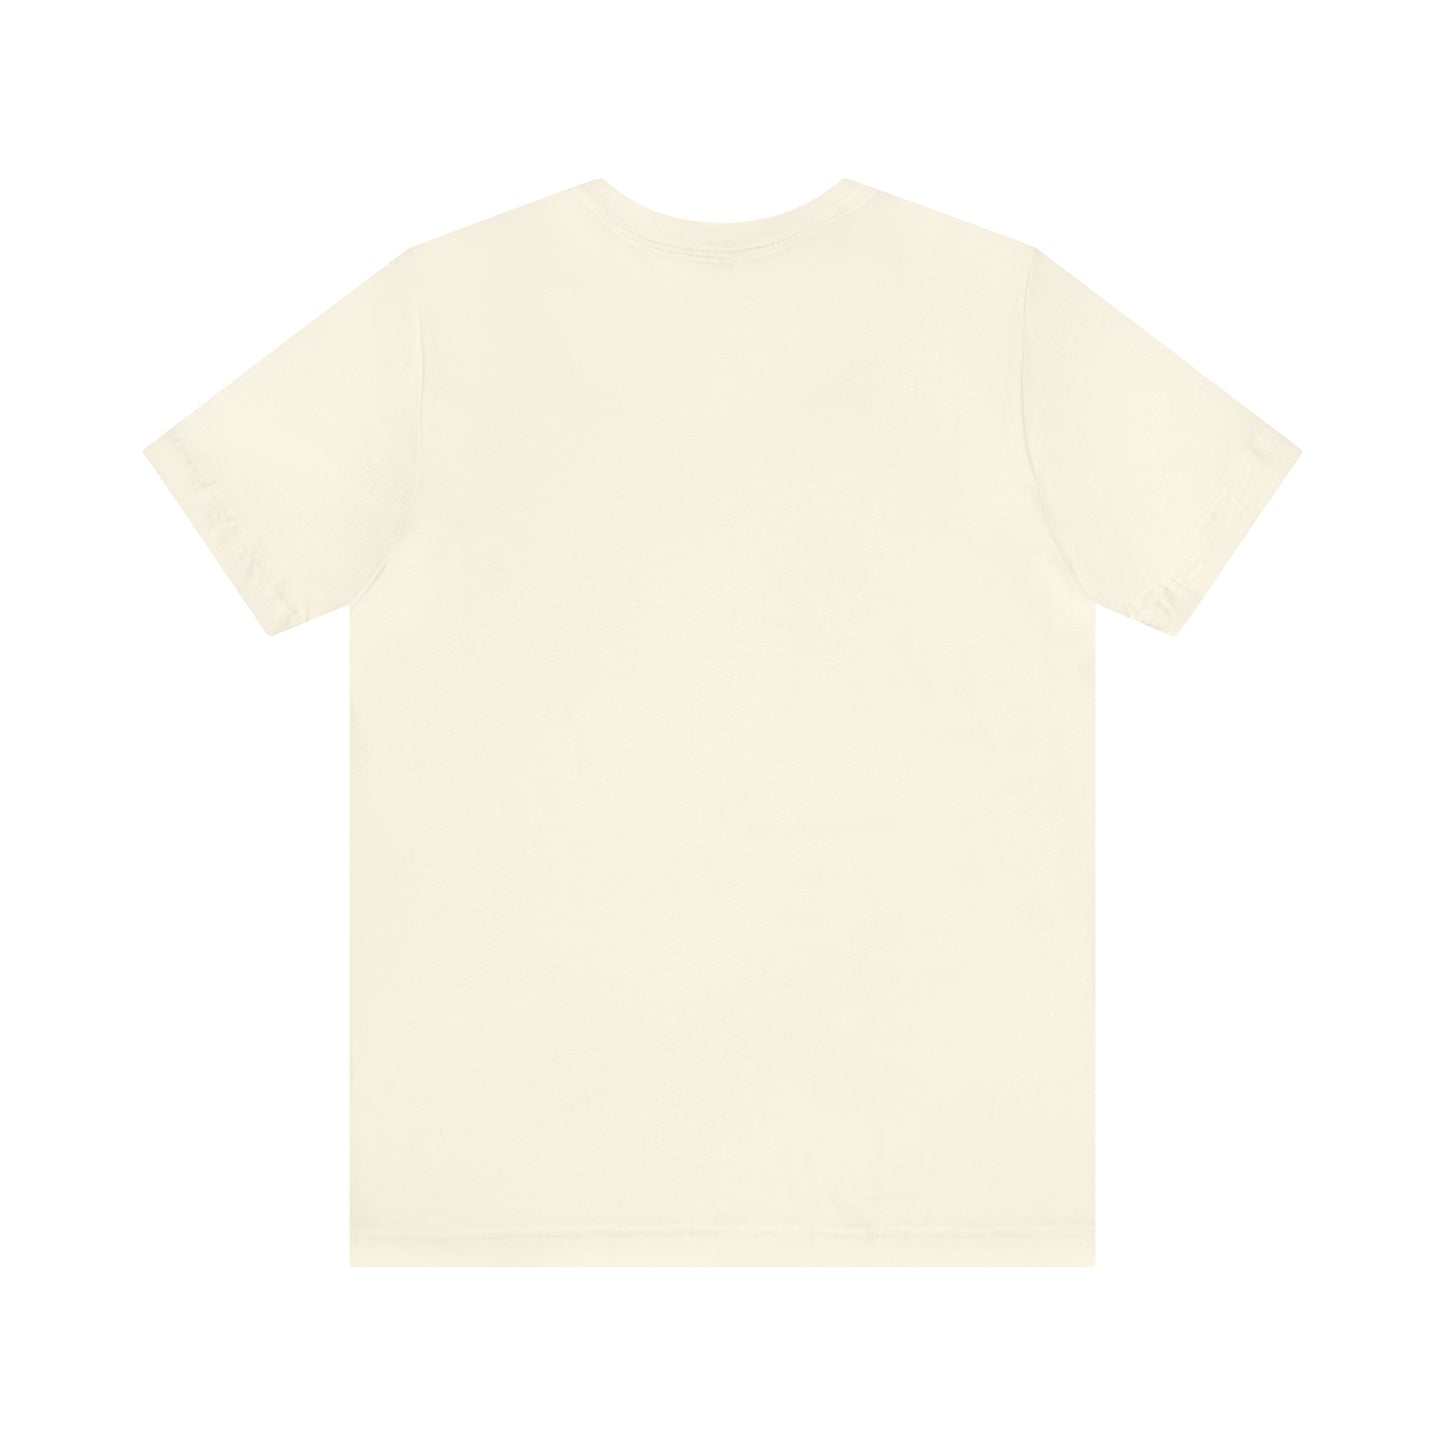 Grunge Fairycore Y2k Printed T-Shirt - Short Sleeves Crewneck Unique Design T-Shirt - Boho Aesthetic Unisex Tee